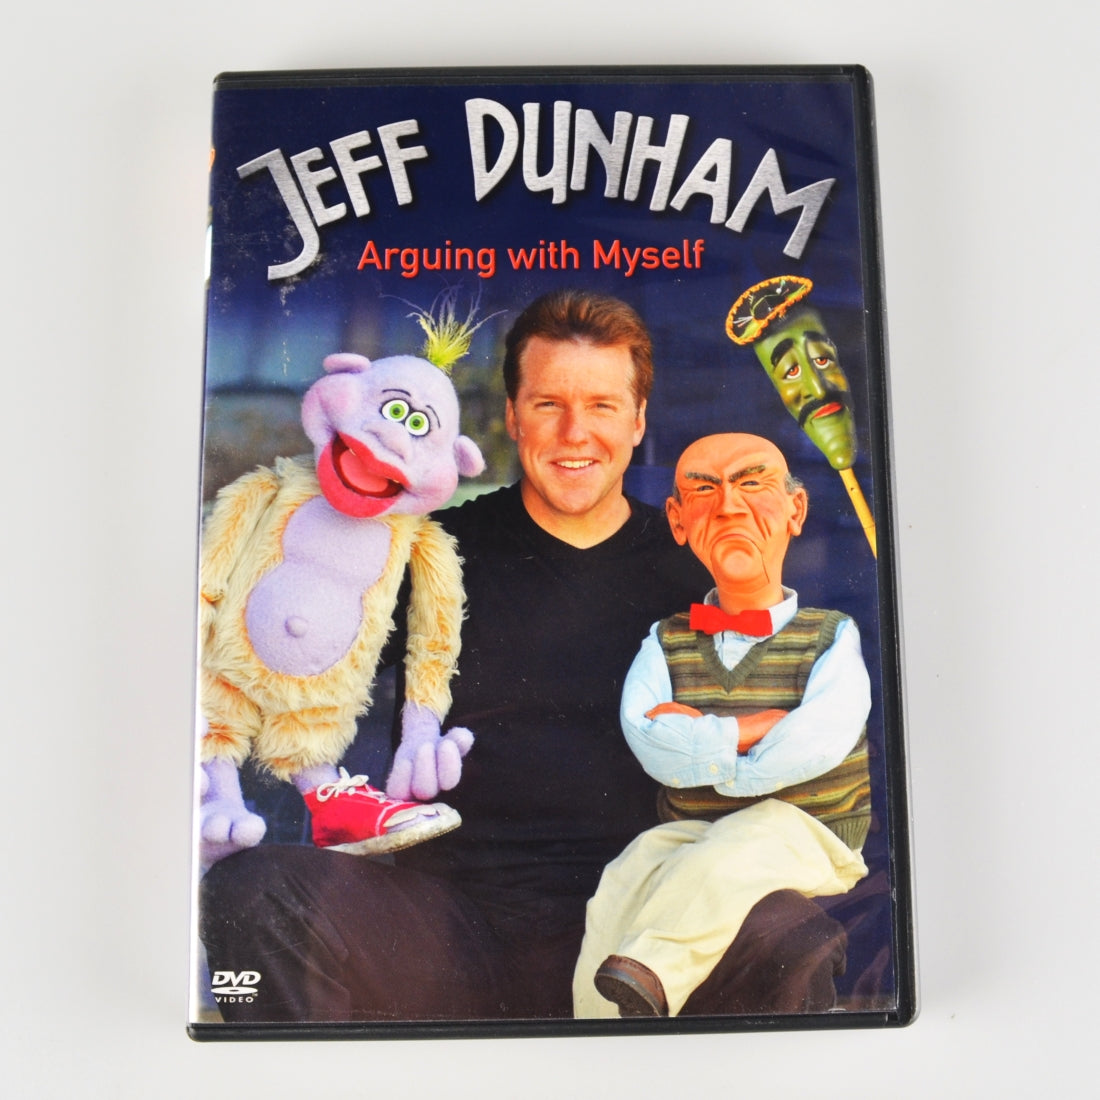 Jeff Dunham: Arguing with Myself (DVD, Widescreen)